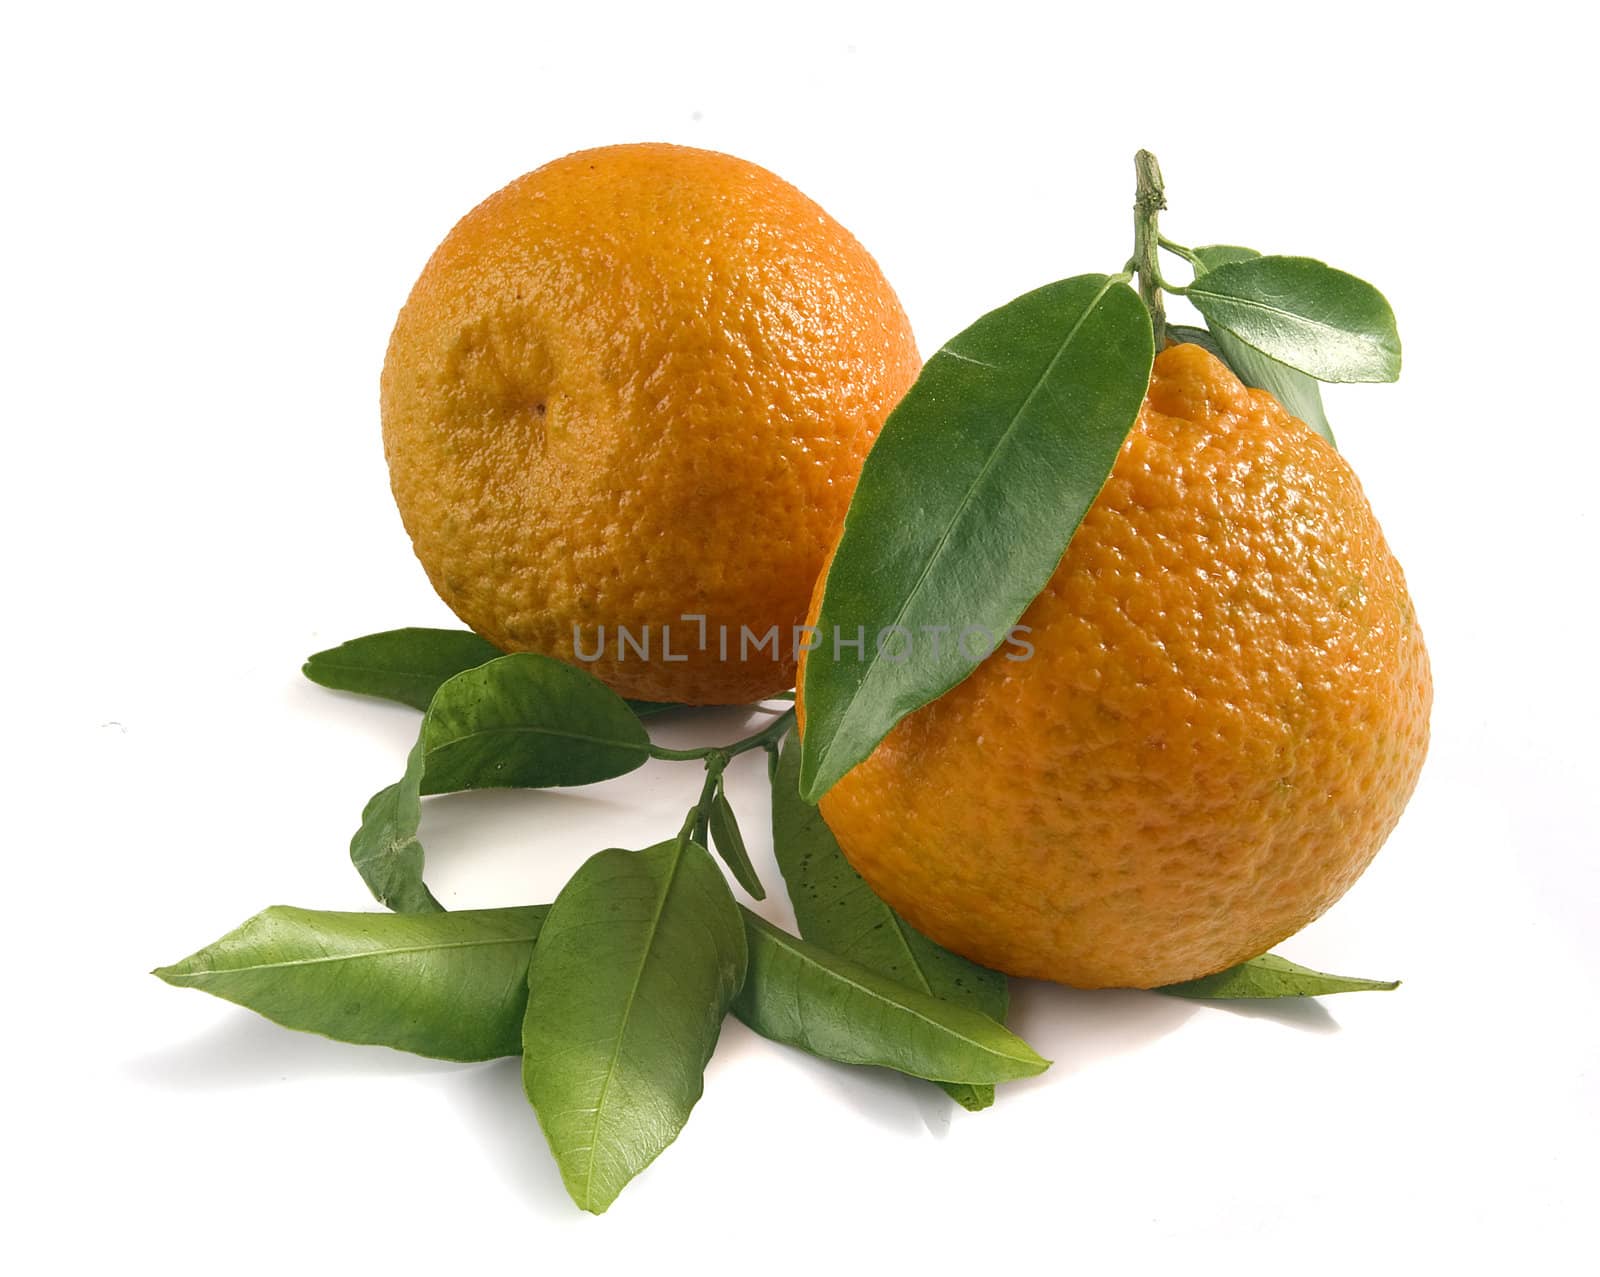 Two tangerines by Angorius